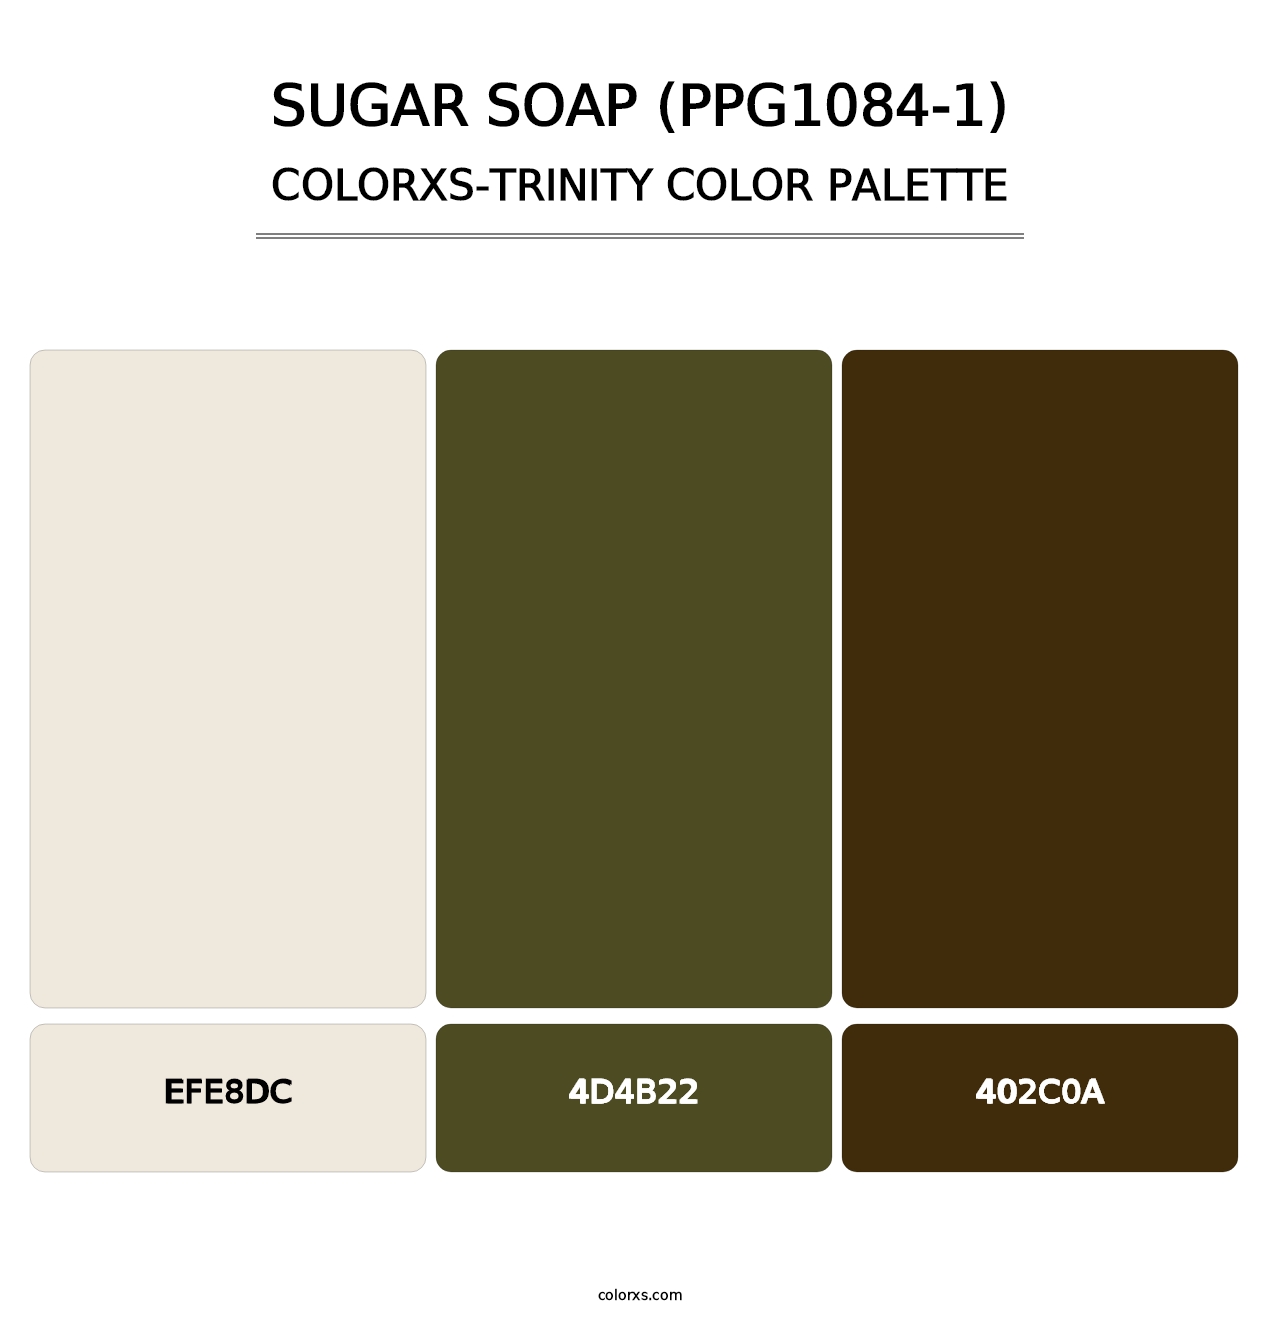 Sugar Soap (PPG1084-1) - Colorxs Trinity Palette